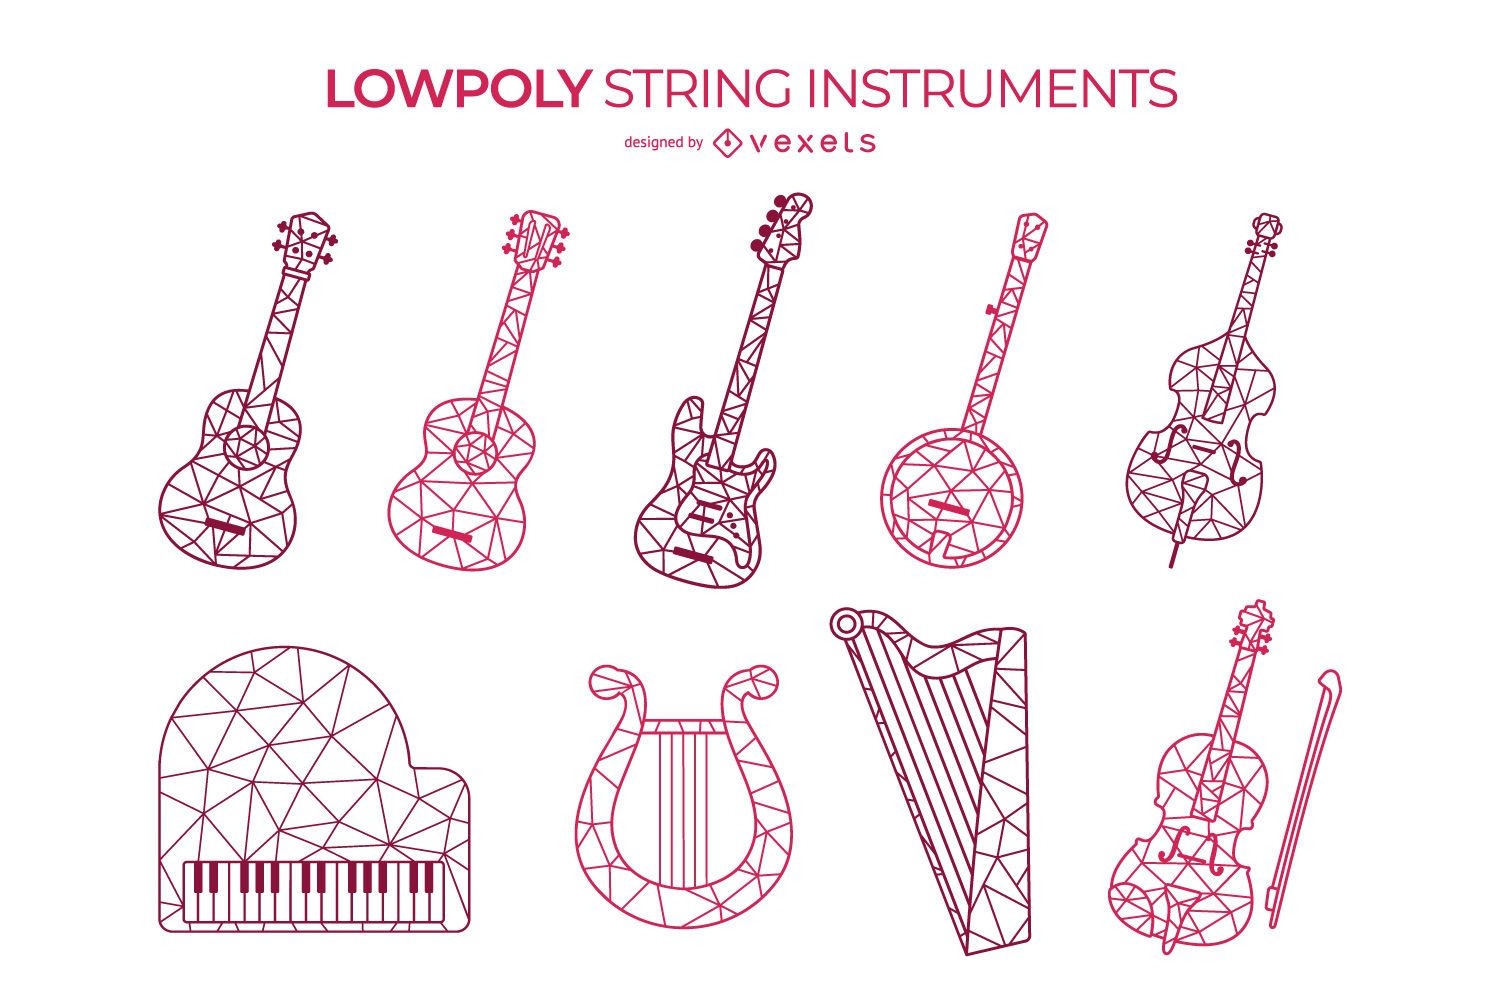 Conjunto de instrumentos de cordas de baixo poli